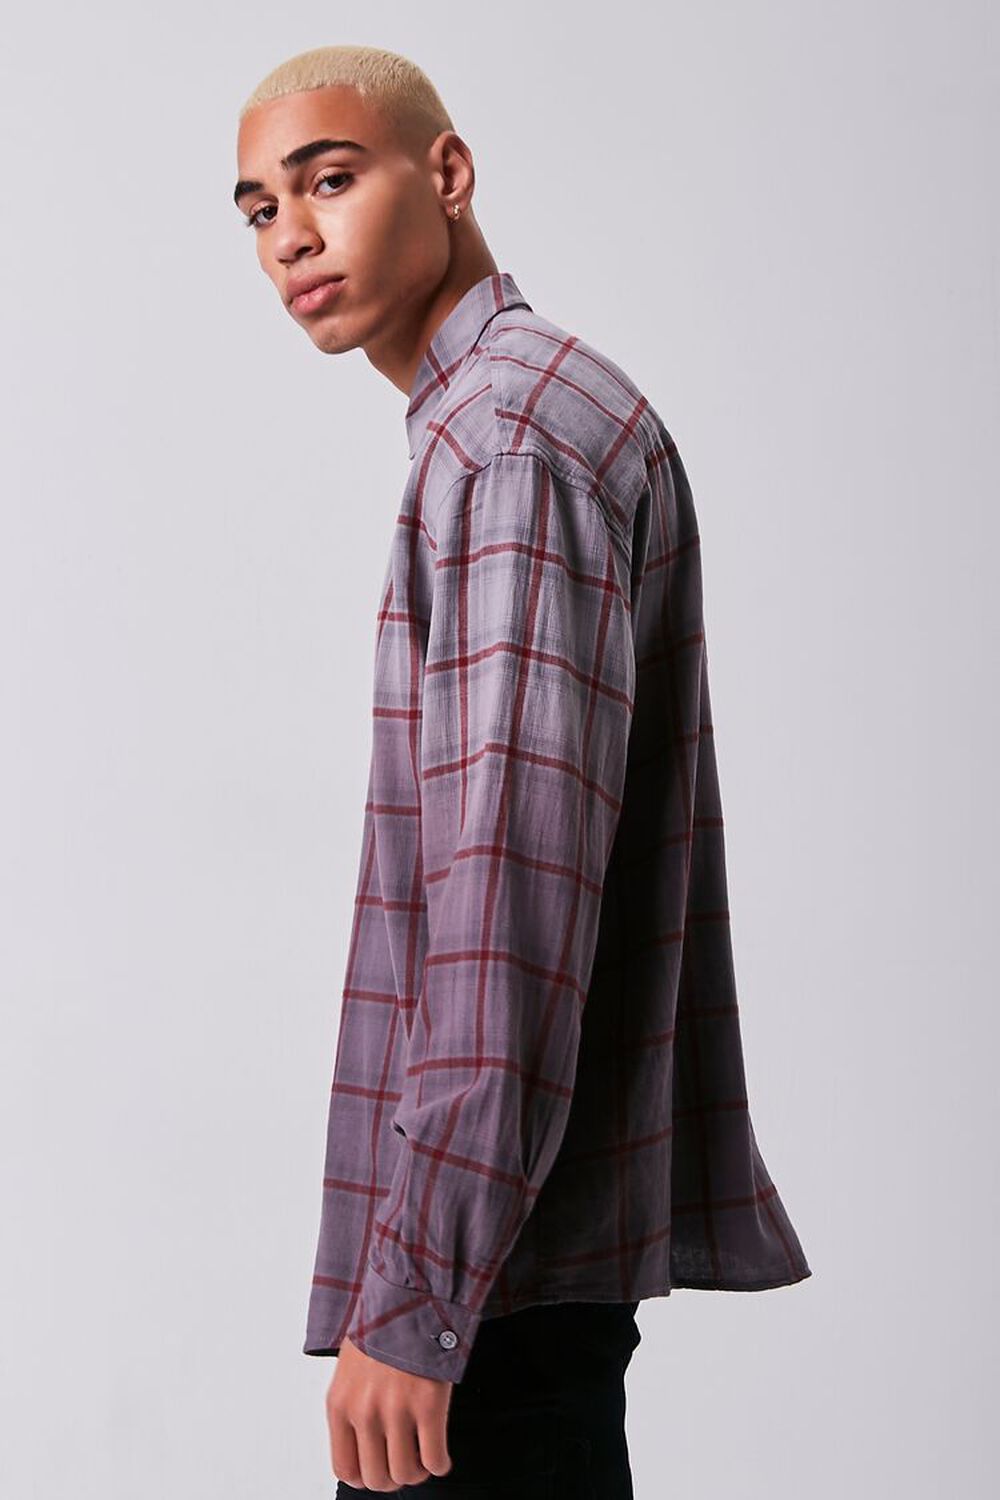 GREY/PLUM Grid Ombre Wash Flannel Shirt, image 2